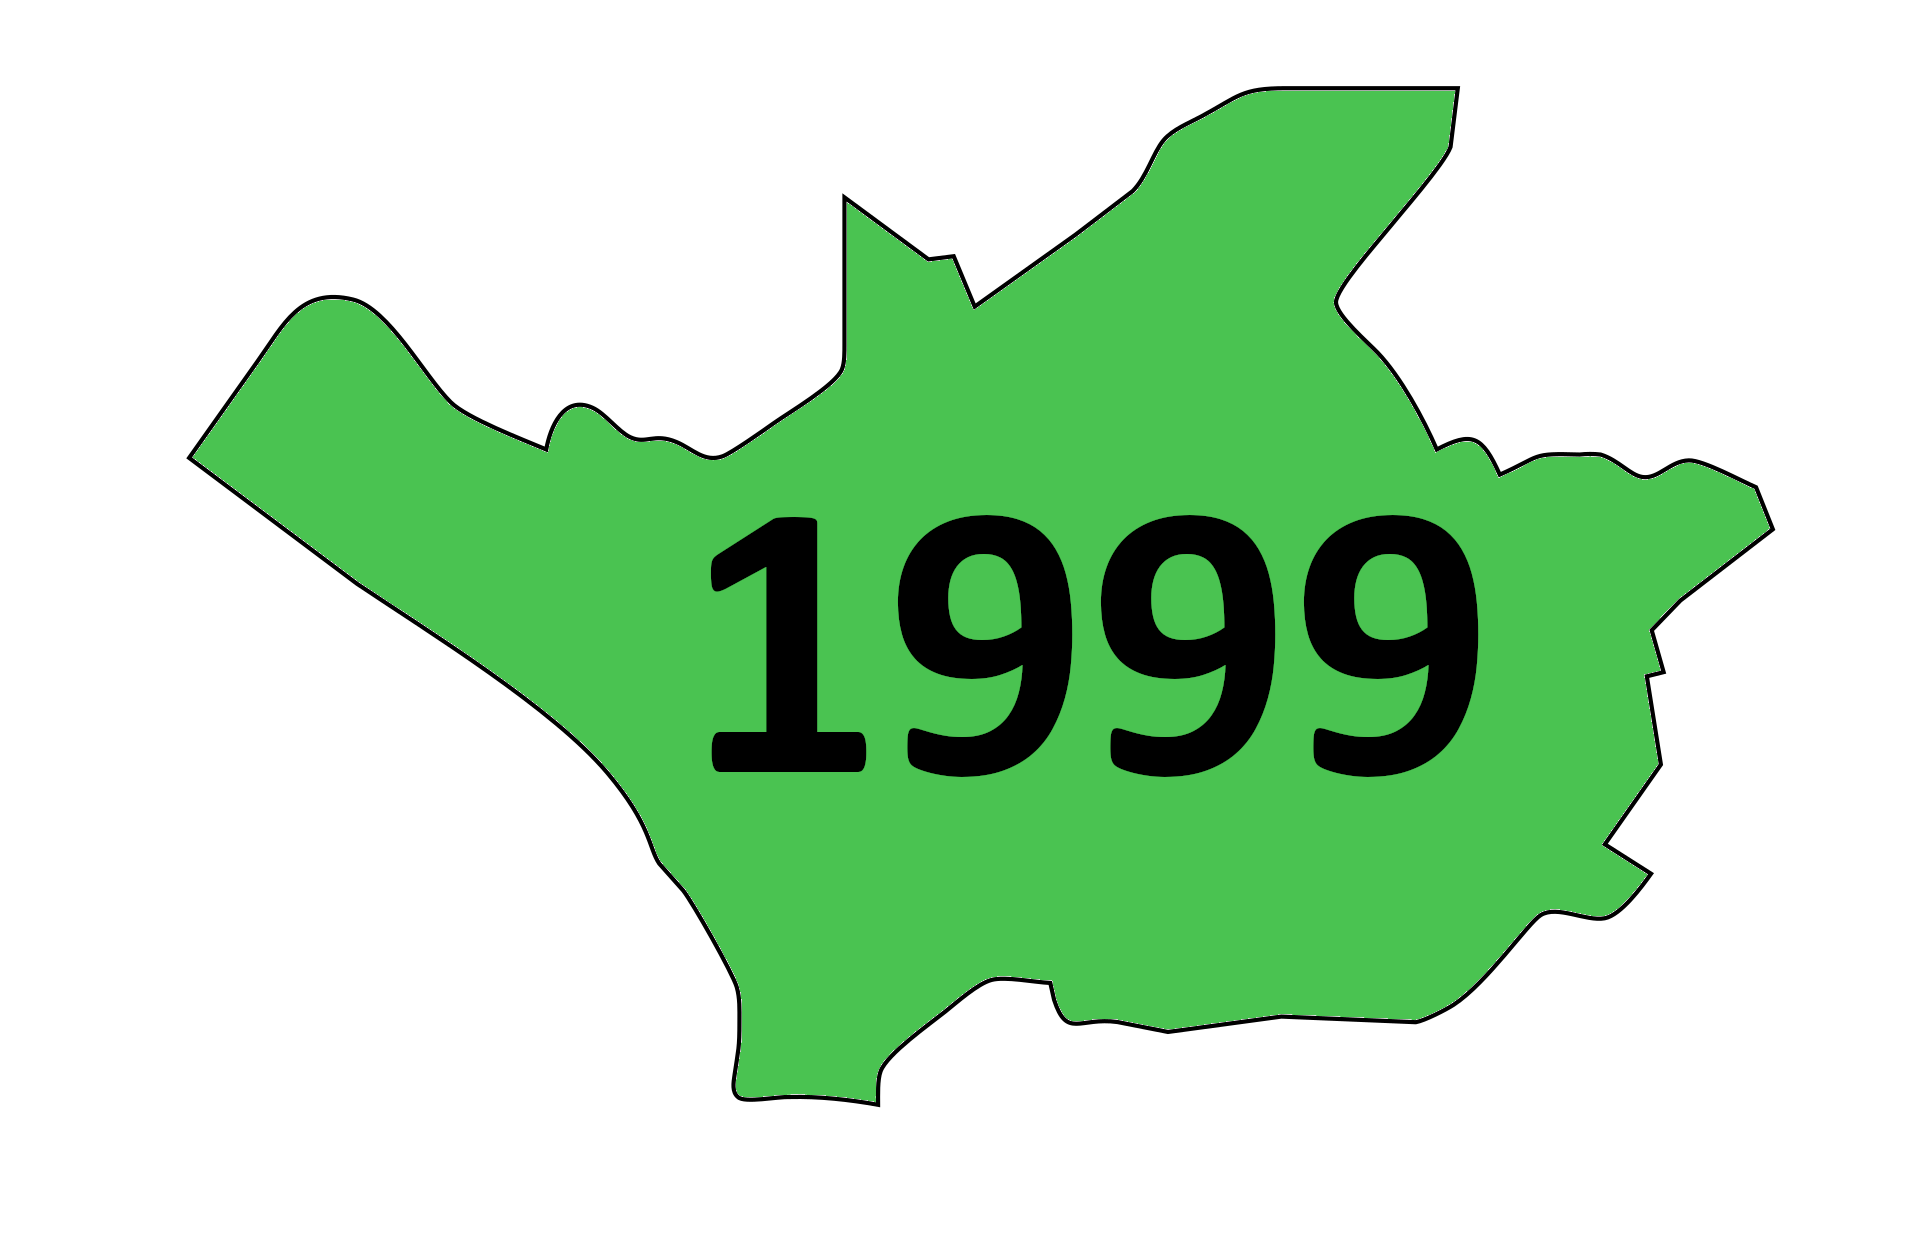 29.04.1999: JU-Bezirksvorstand neu gewählt